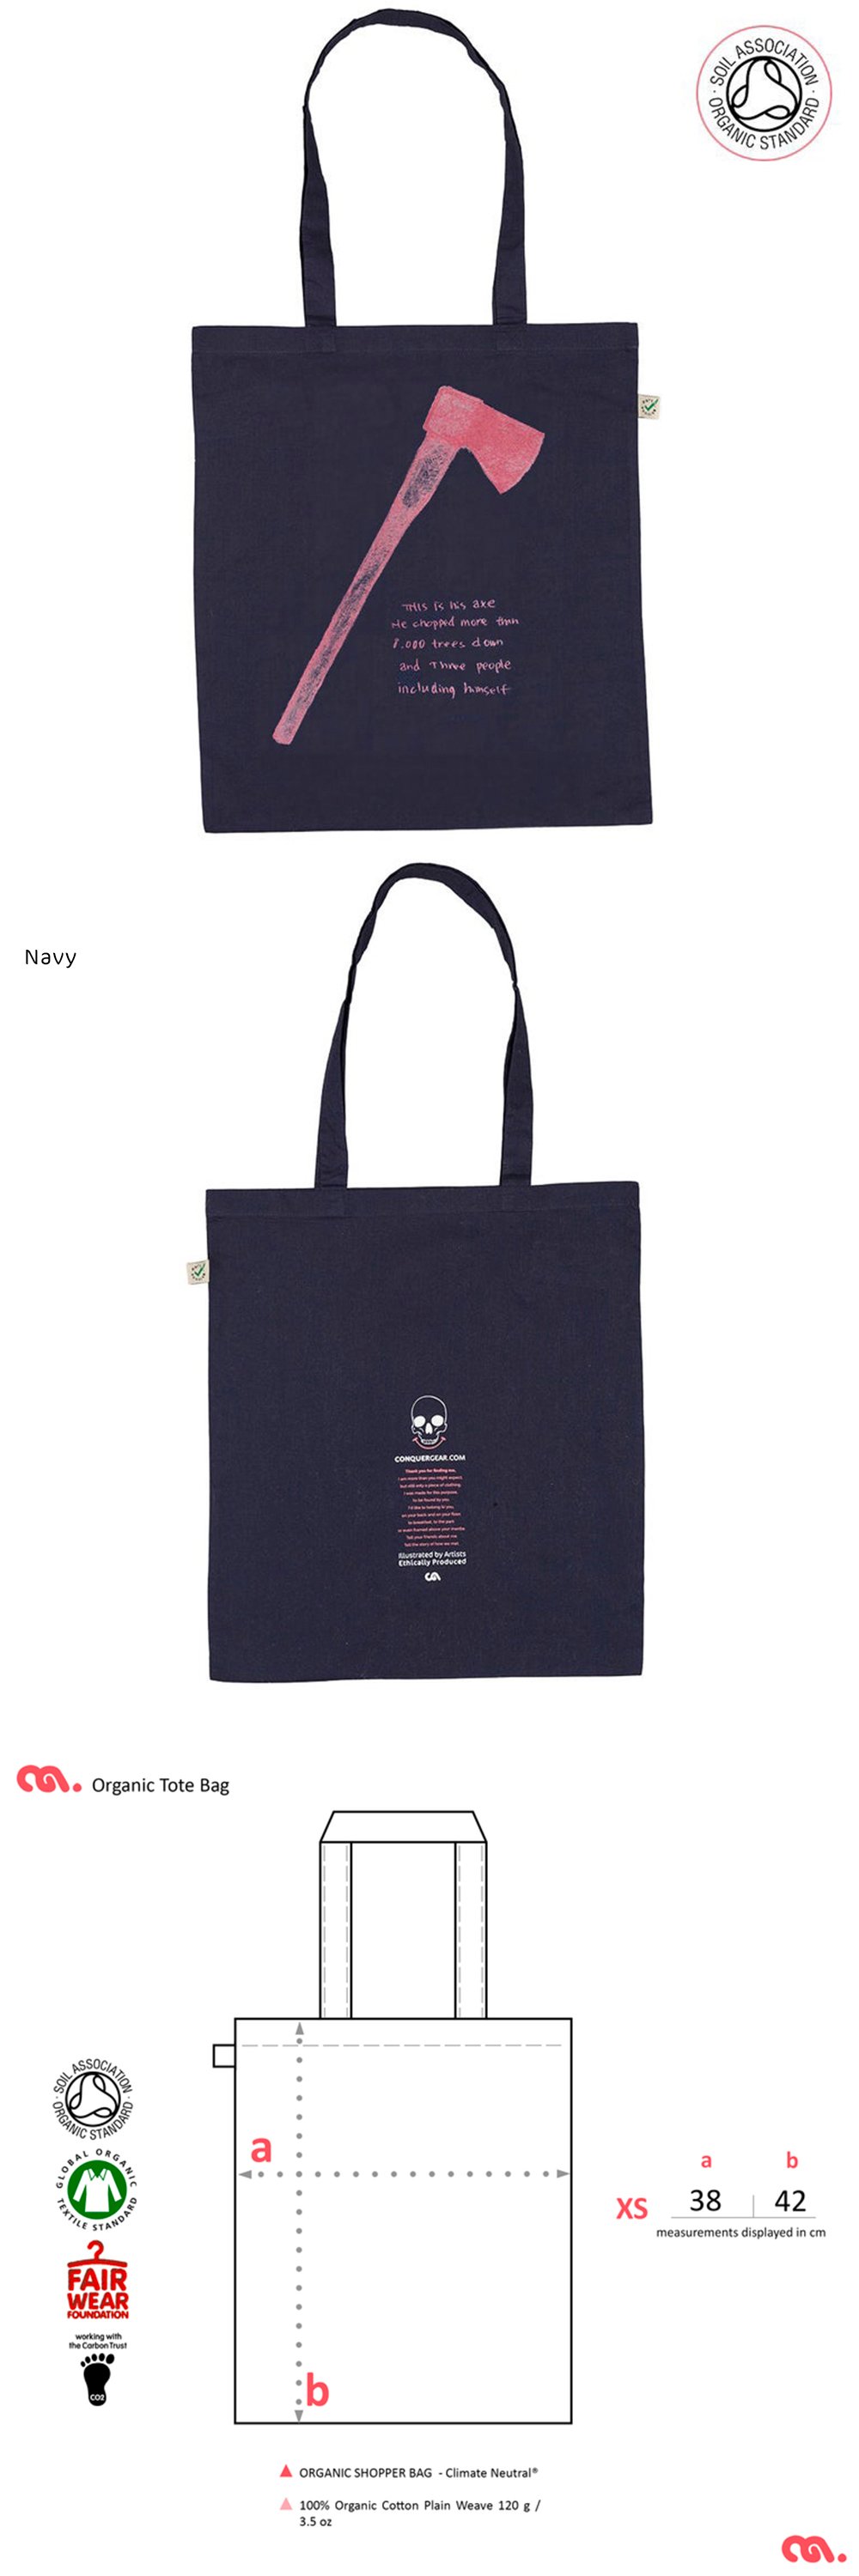 Axe Tote Shopping Bag (Organic)